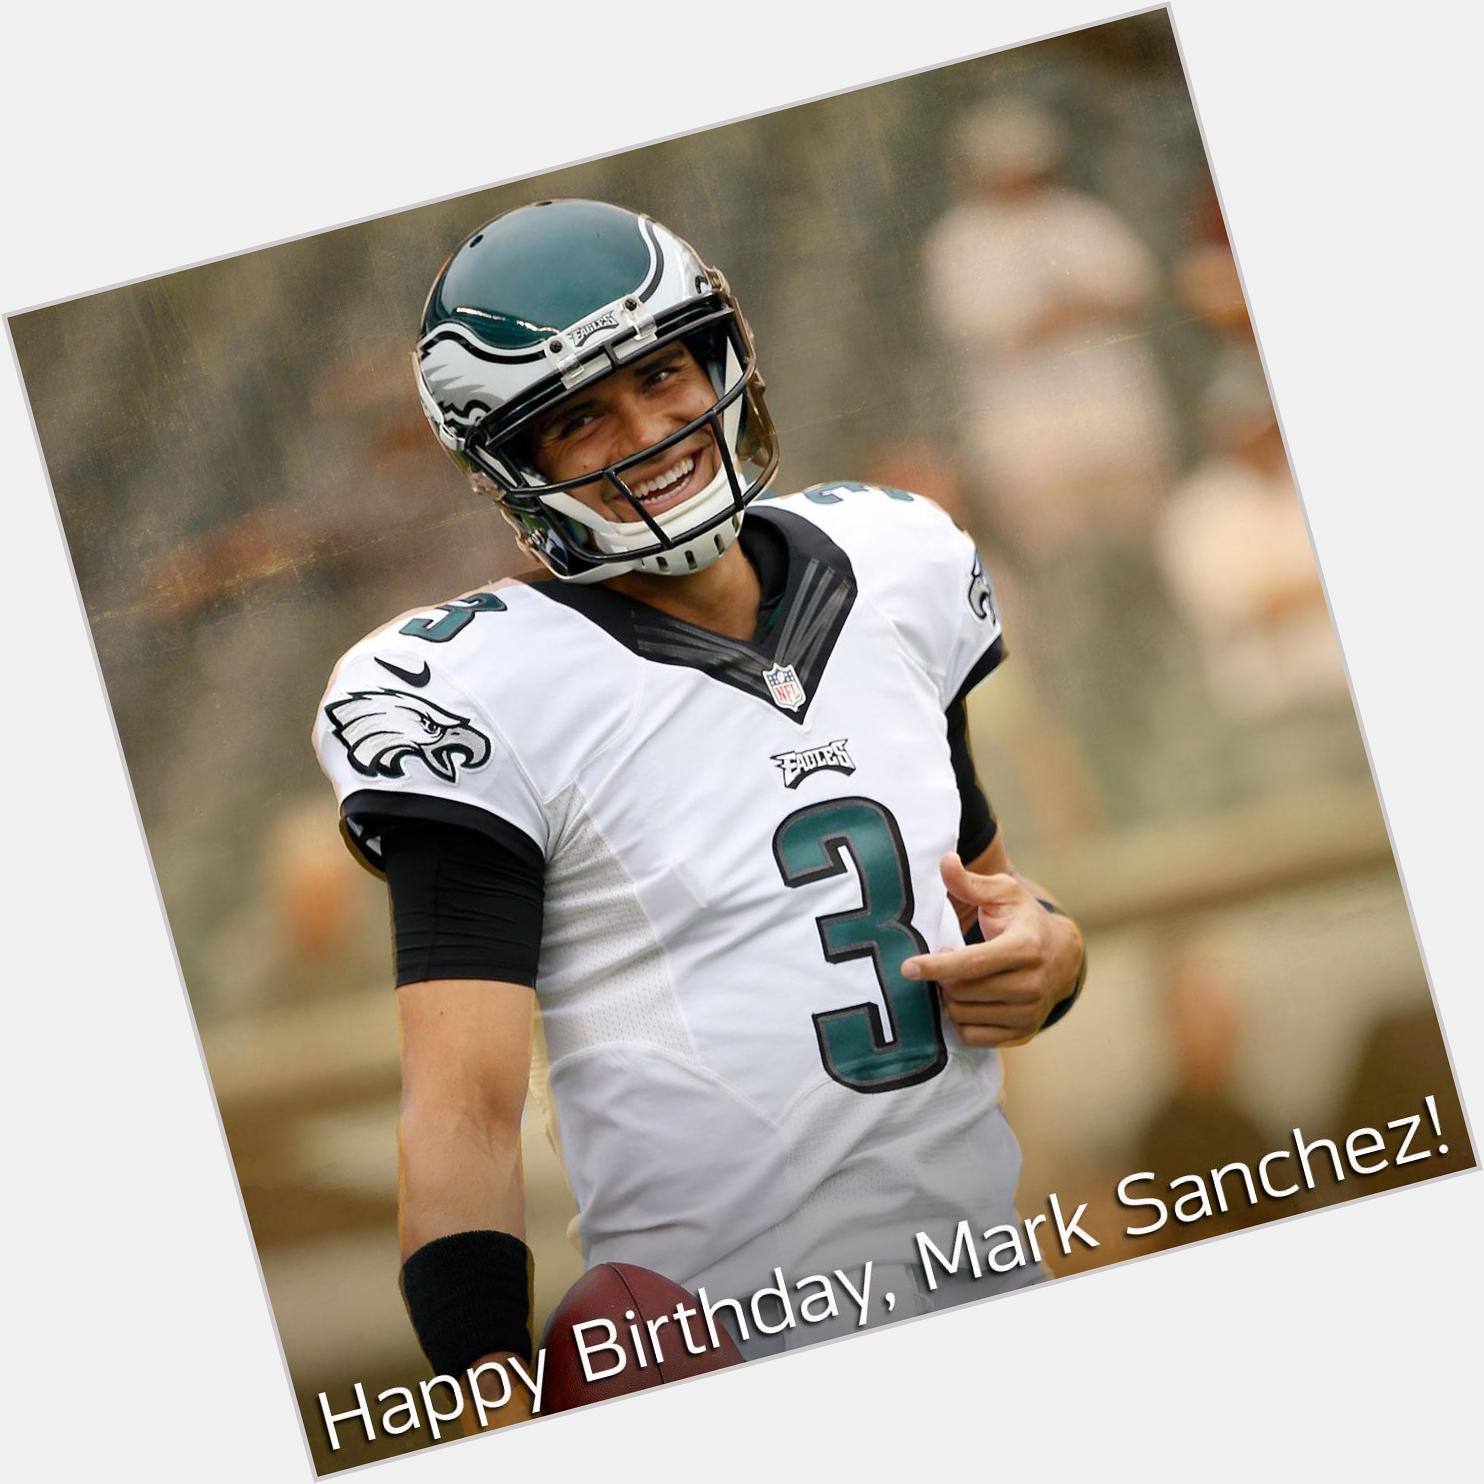   to wish Philly QB Mark Sanchez a Happy Birthday! 